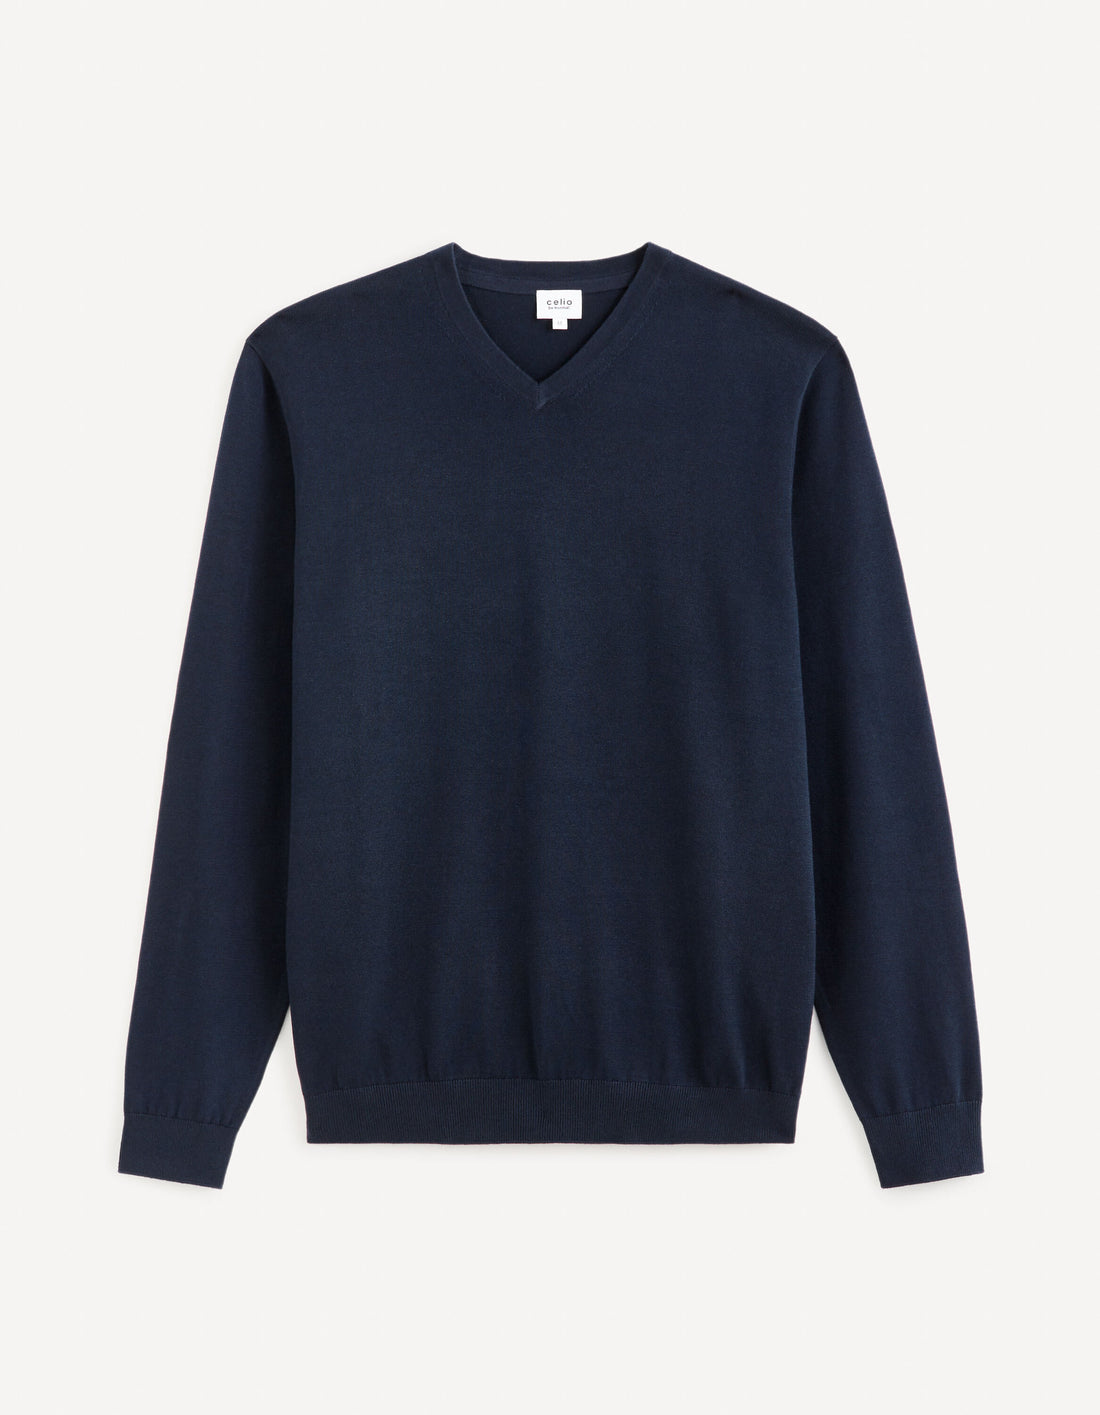 V-Neck Sweater 100% Cotton - Navy_DECOTONV_NAVY_02